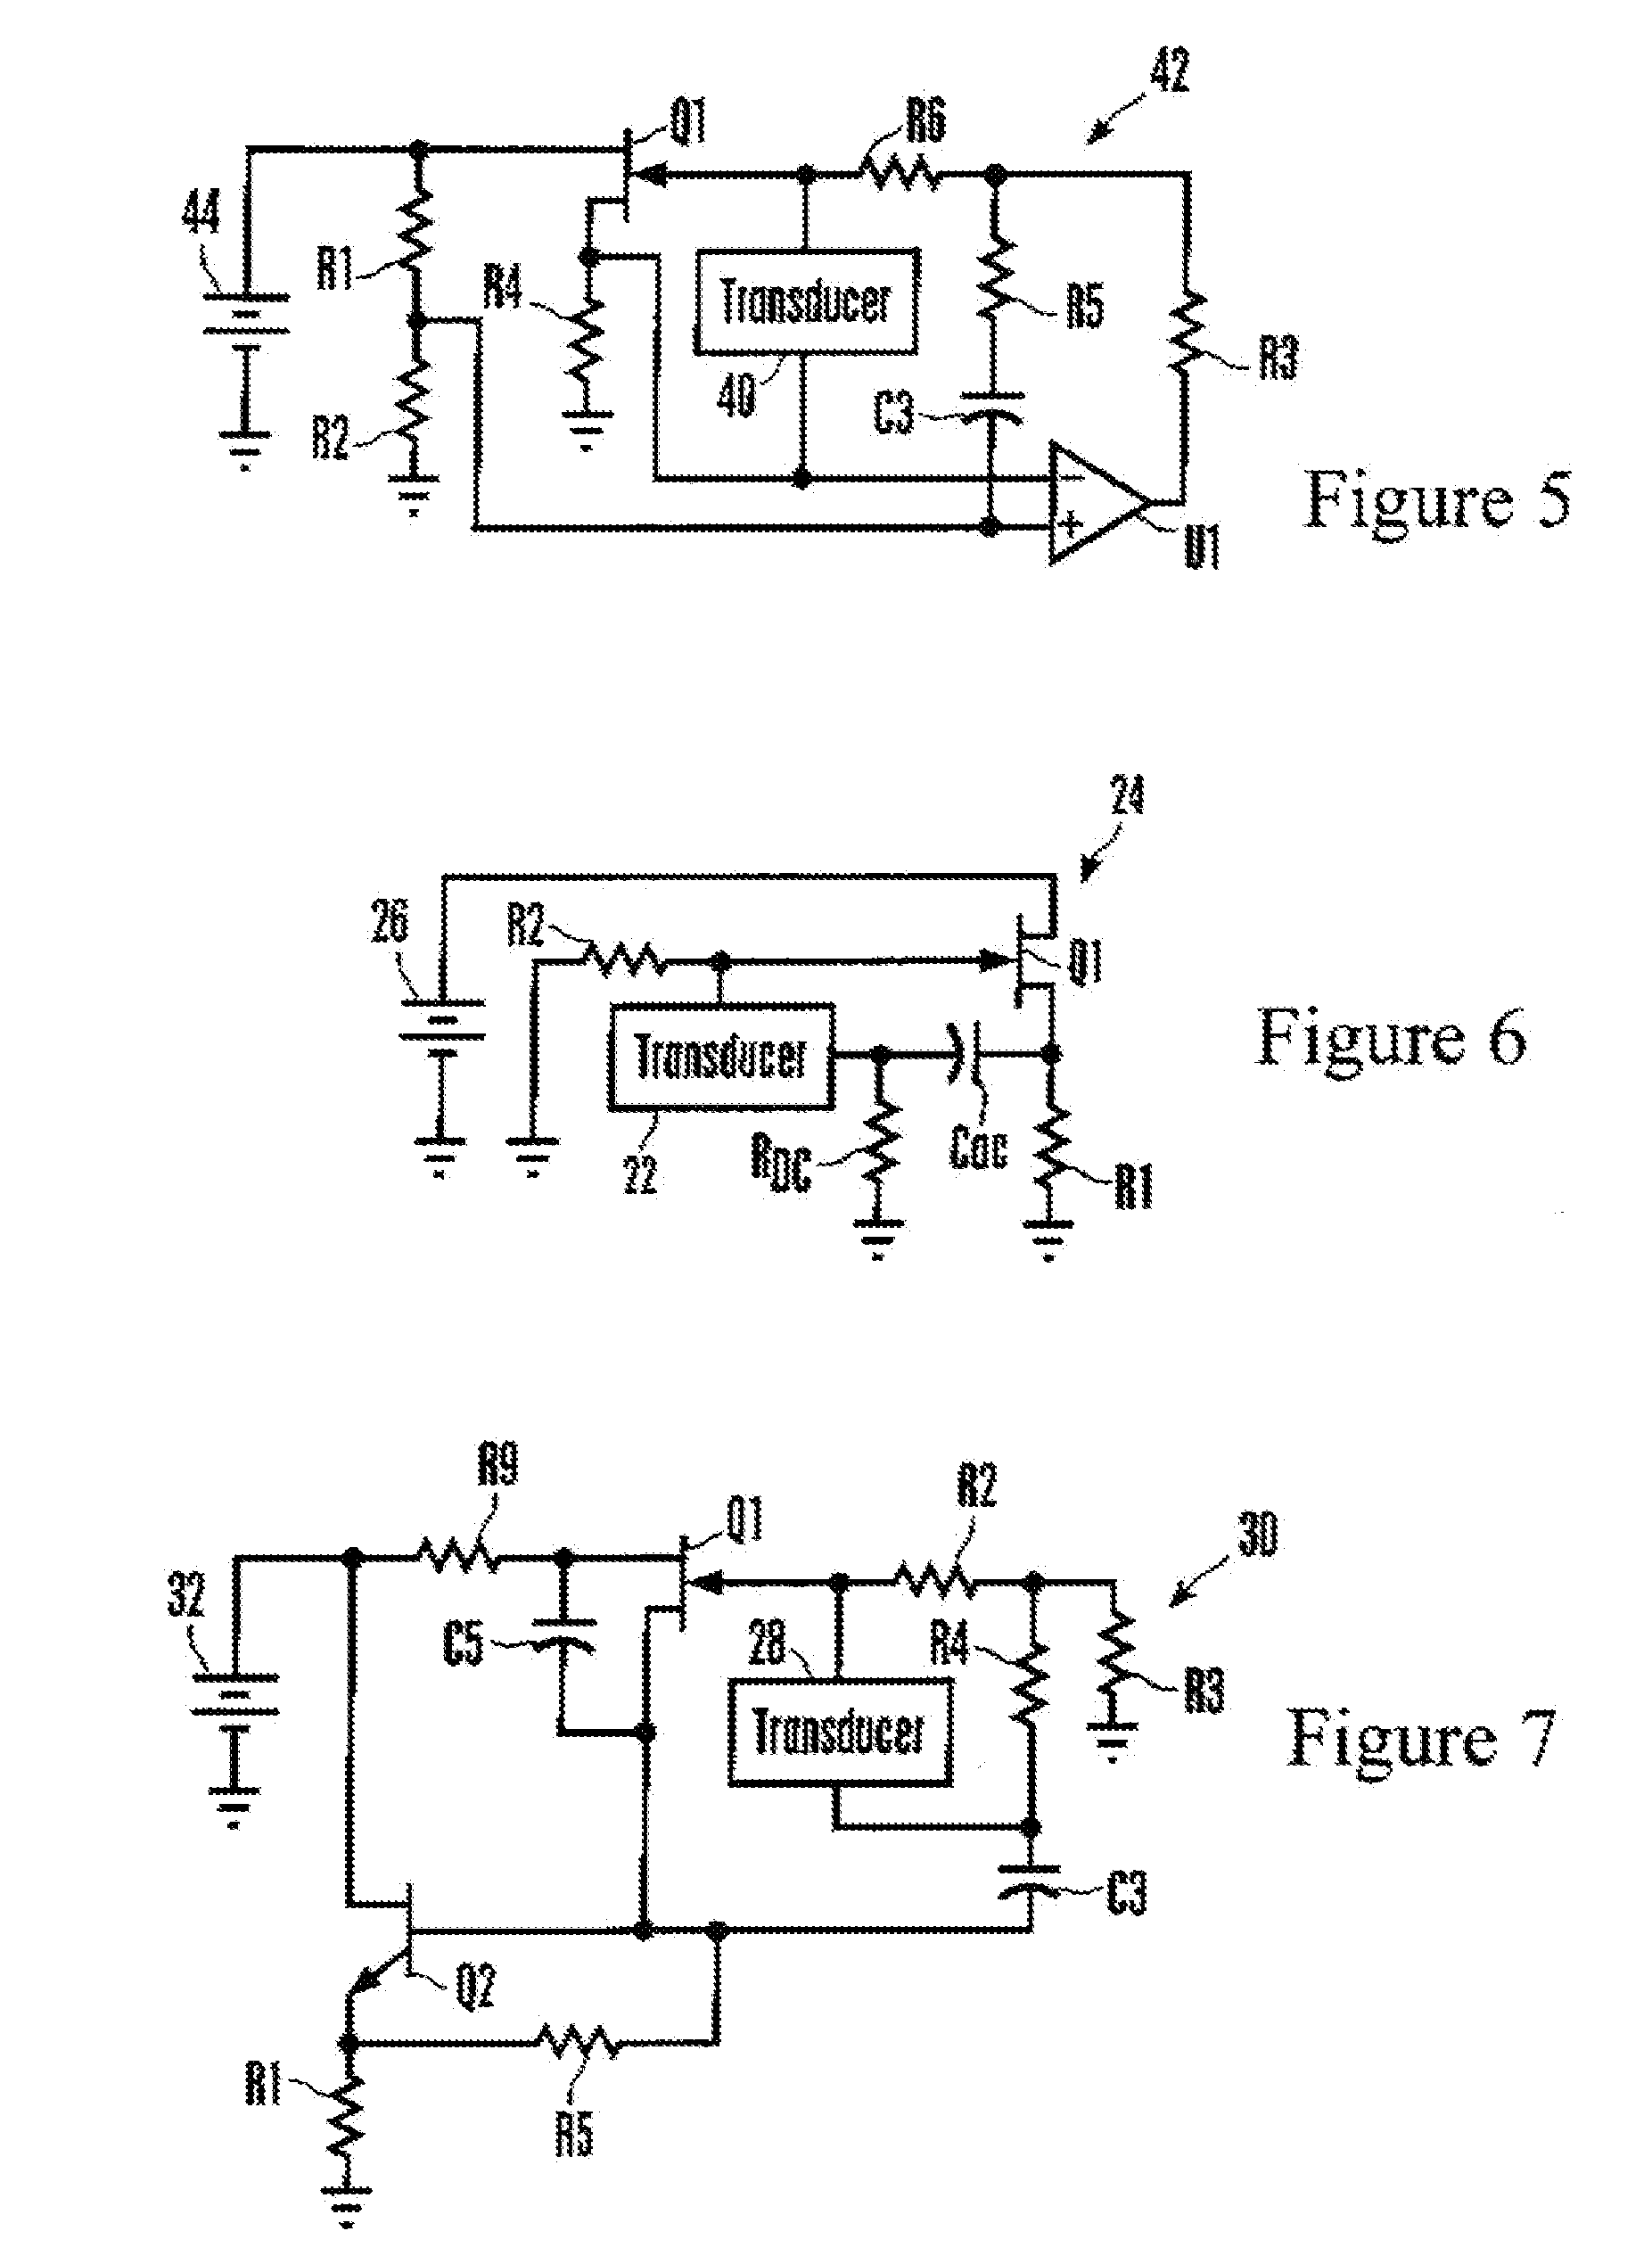 Piezoelectric transducer signal processing circuit